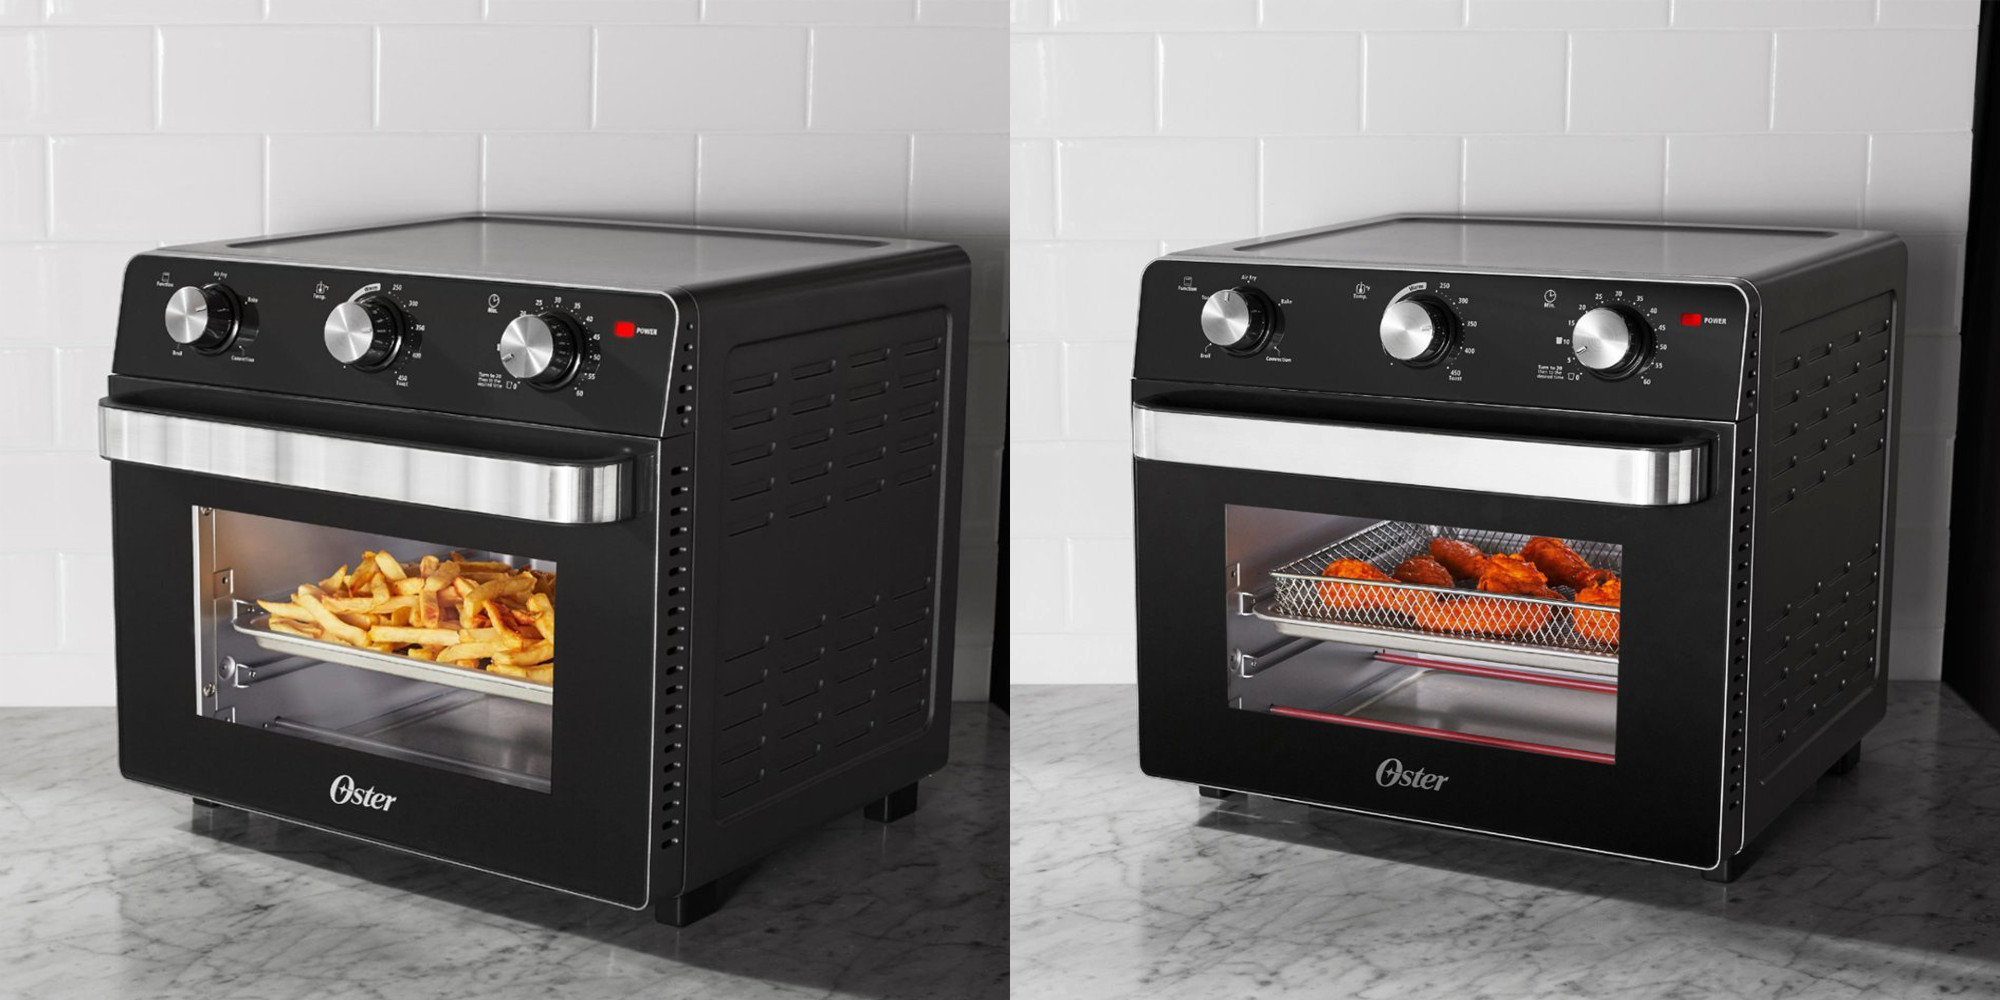 https://9to5toys.com/wp-content/uploads/sites/5/2019/09/Oster-Air-Fryer-Toaster-Oven-TSSTTVMAF1.jpg